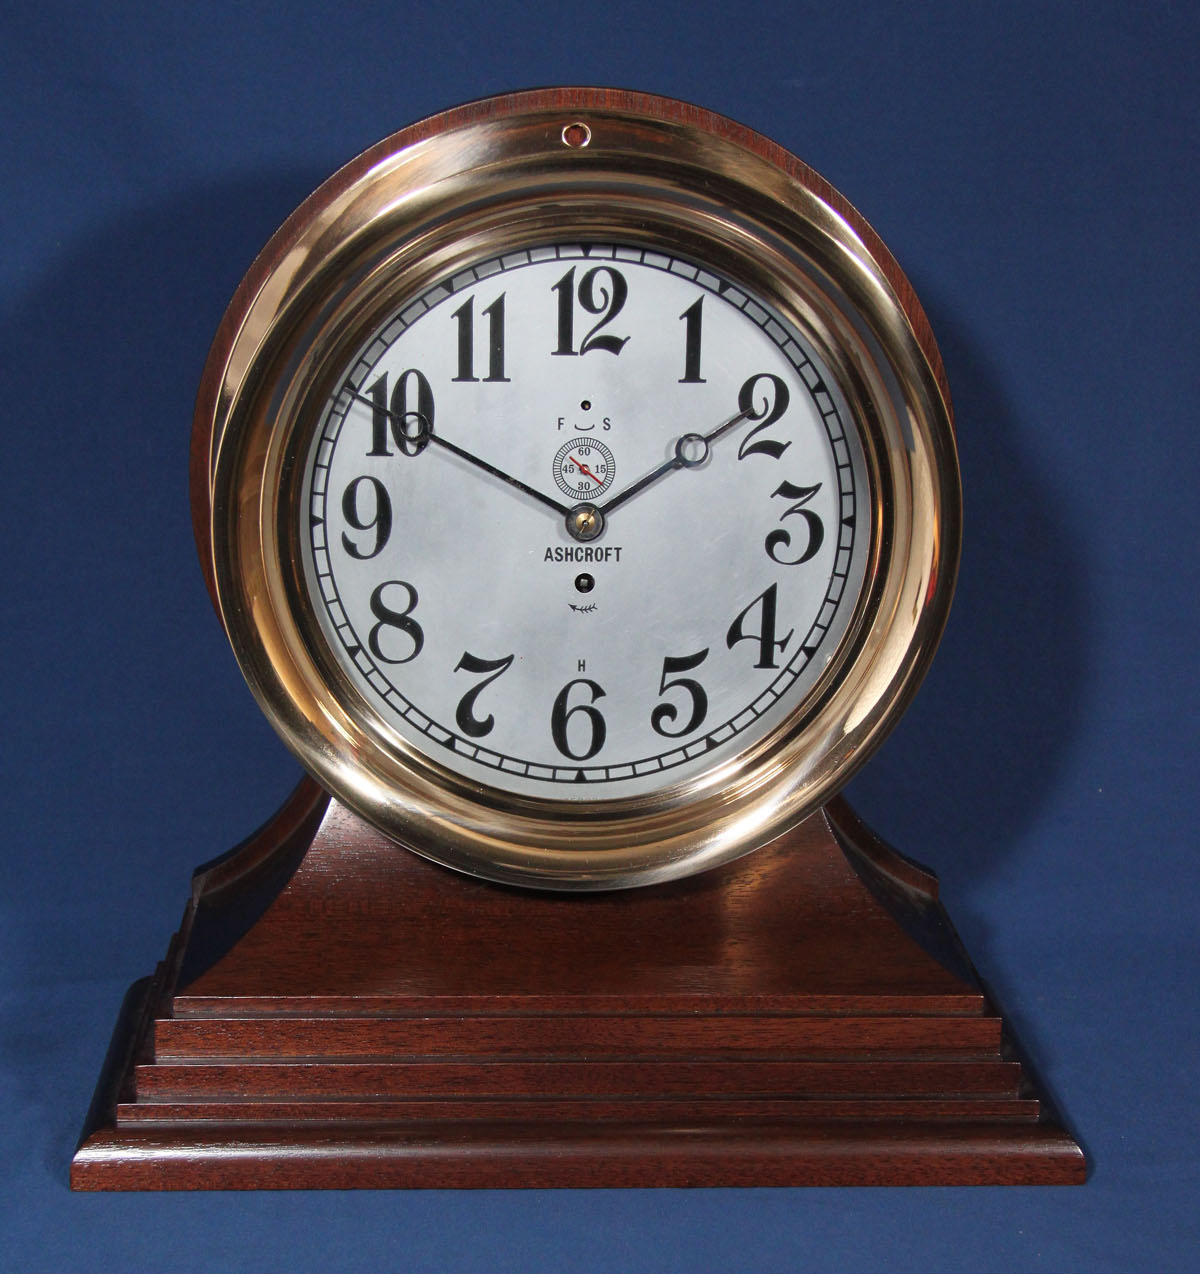 E. Howard 10 inch Marine Clock for Ashcroft